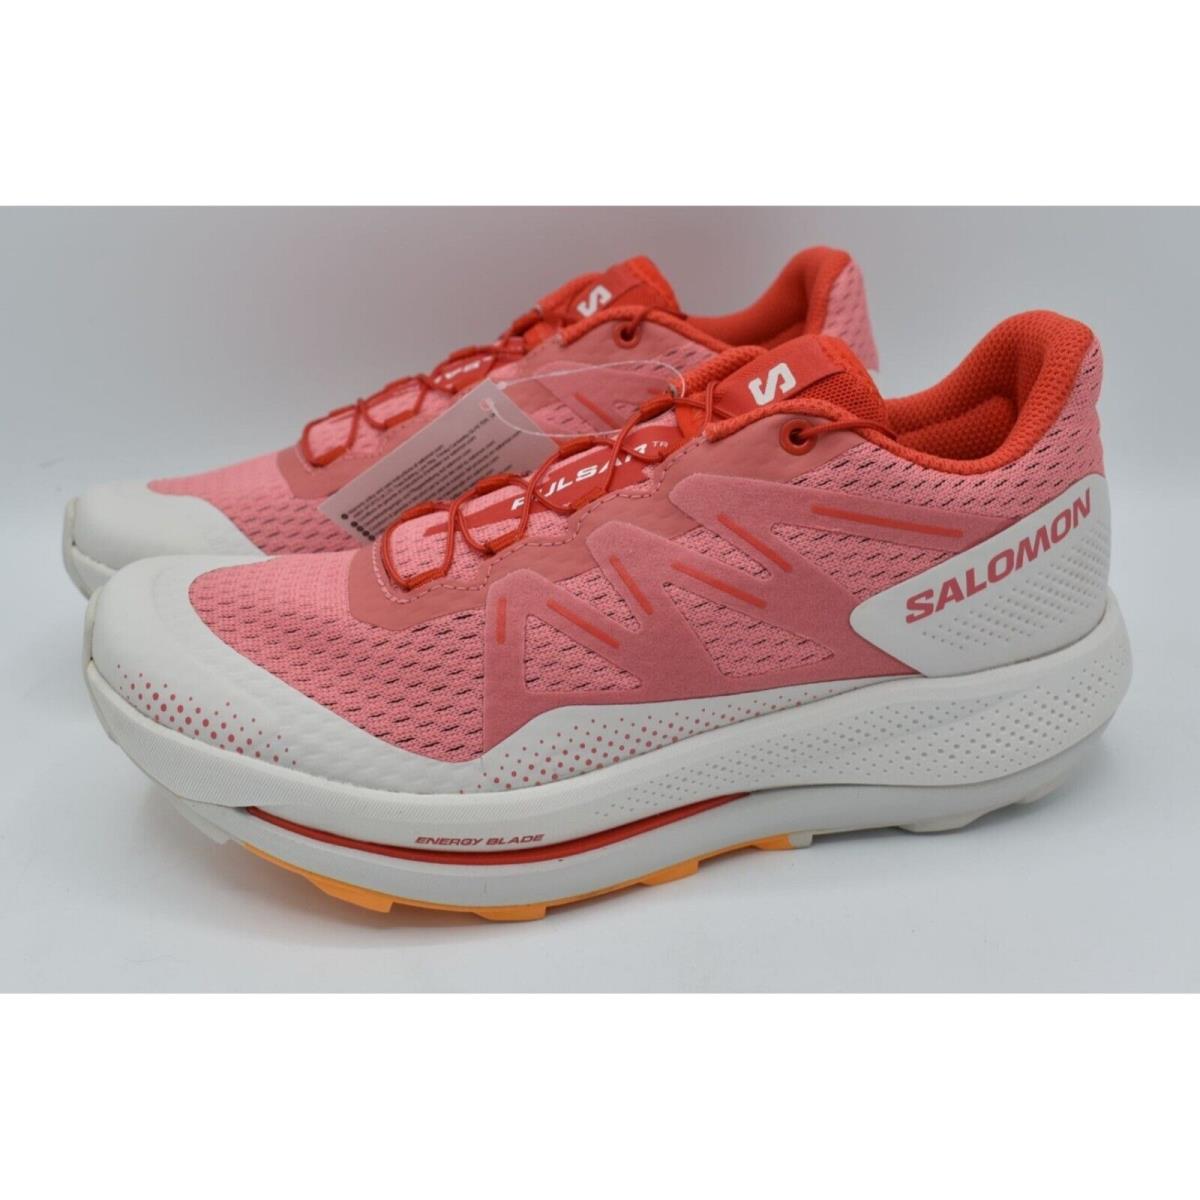 Salomon Womens Size 10 Pulsar Trail Rose Cloud Orange Running Shoes Sneakers